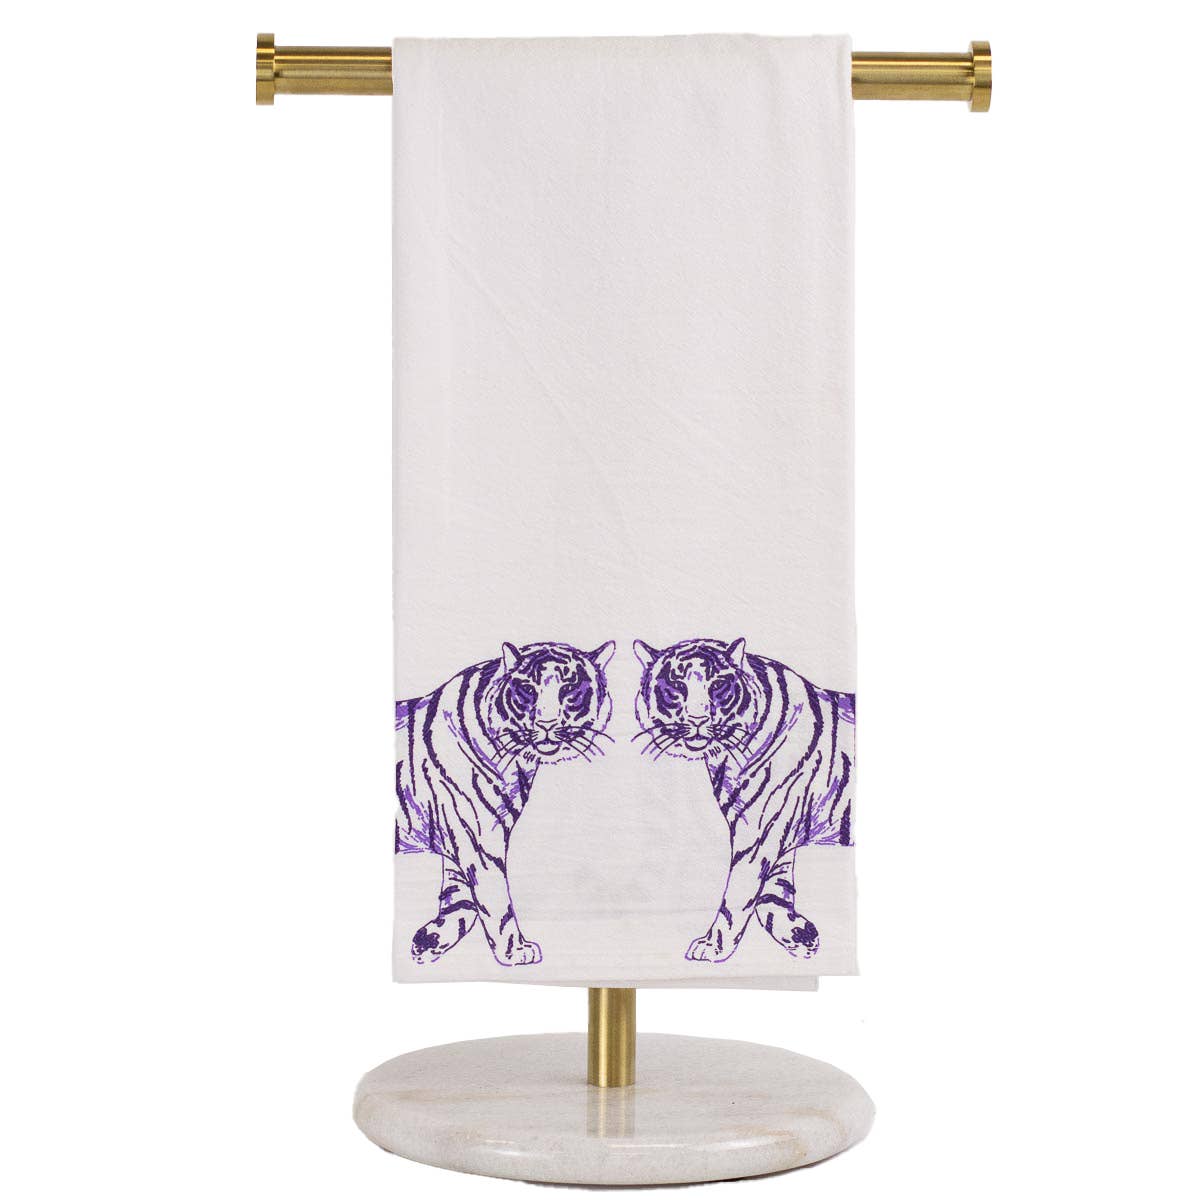 Tiger Walk Flour Sack Hand Towel   White/Purple   20x28